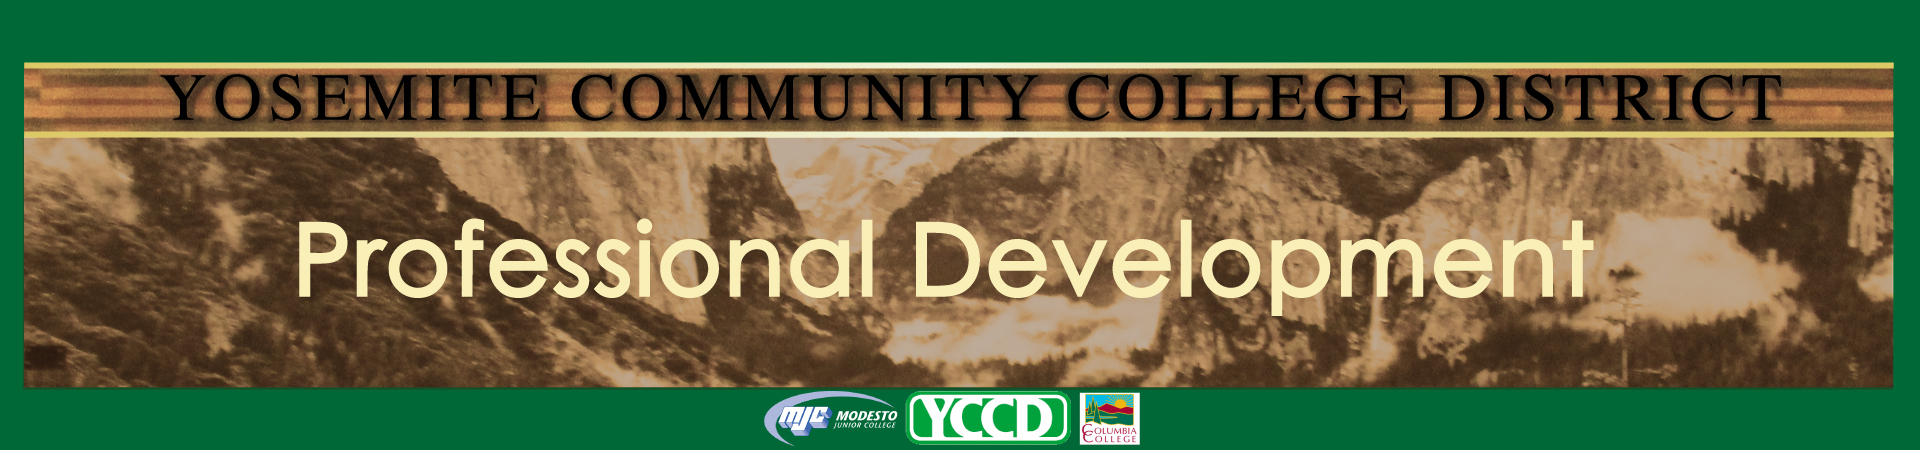 YCCD Professional Development